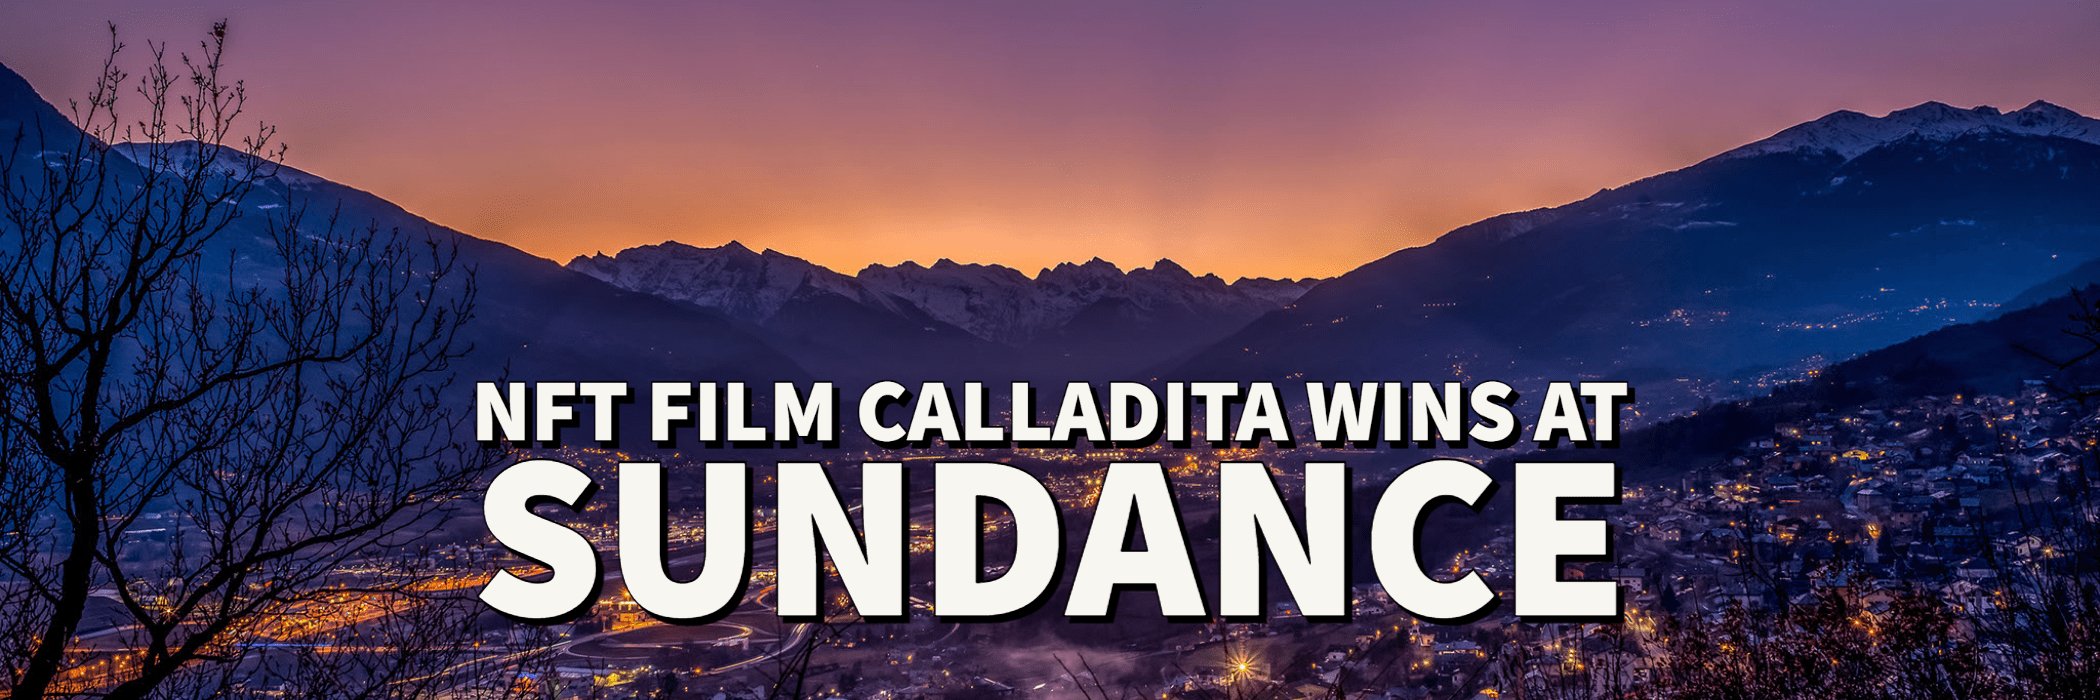 calladita wins at sundance-1